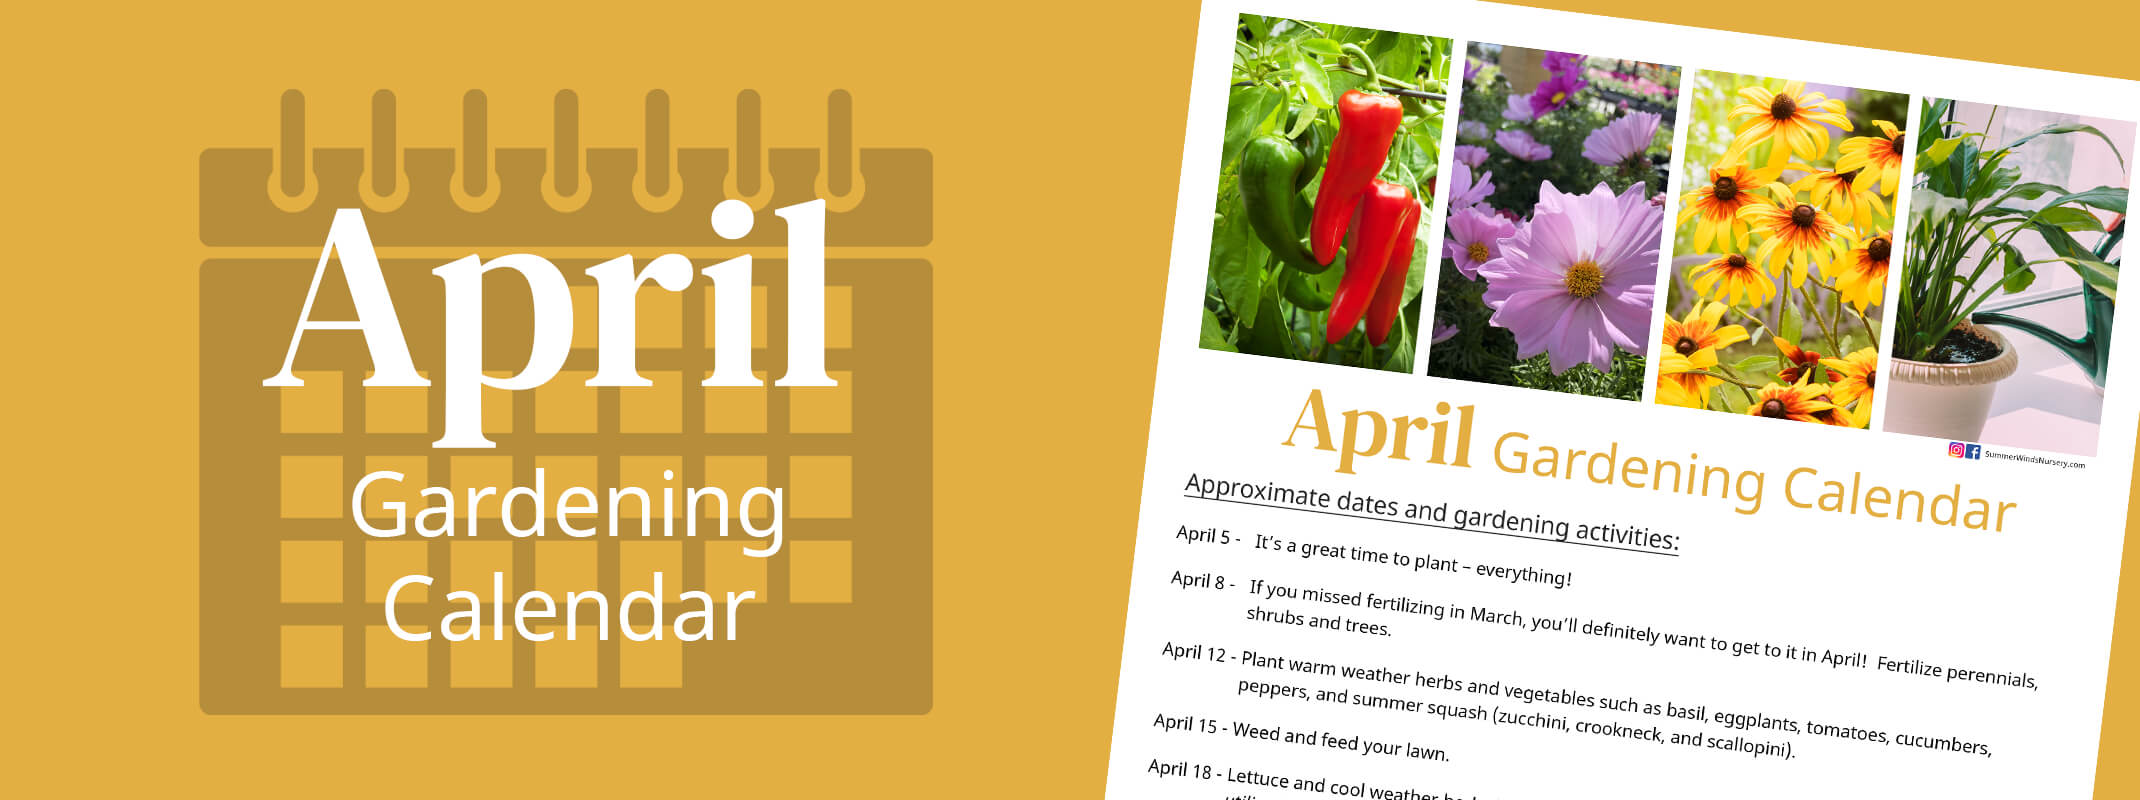 April gardening calendar with gardening tips 